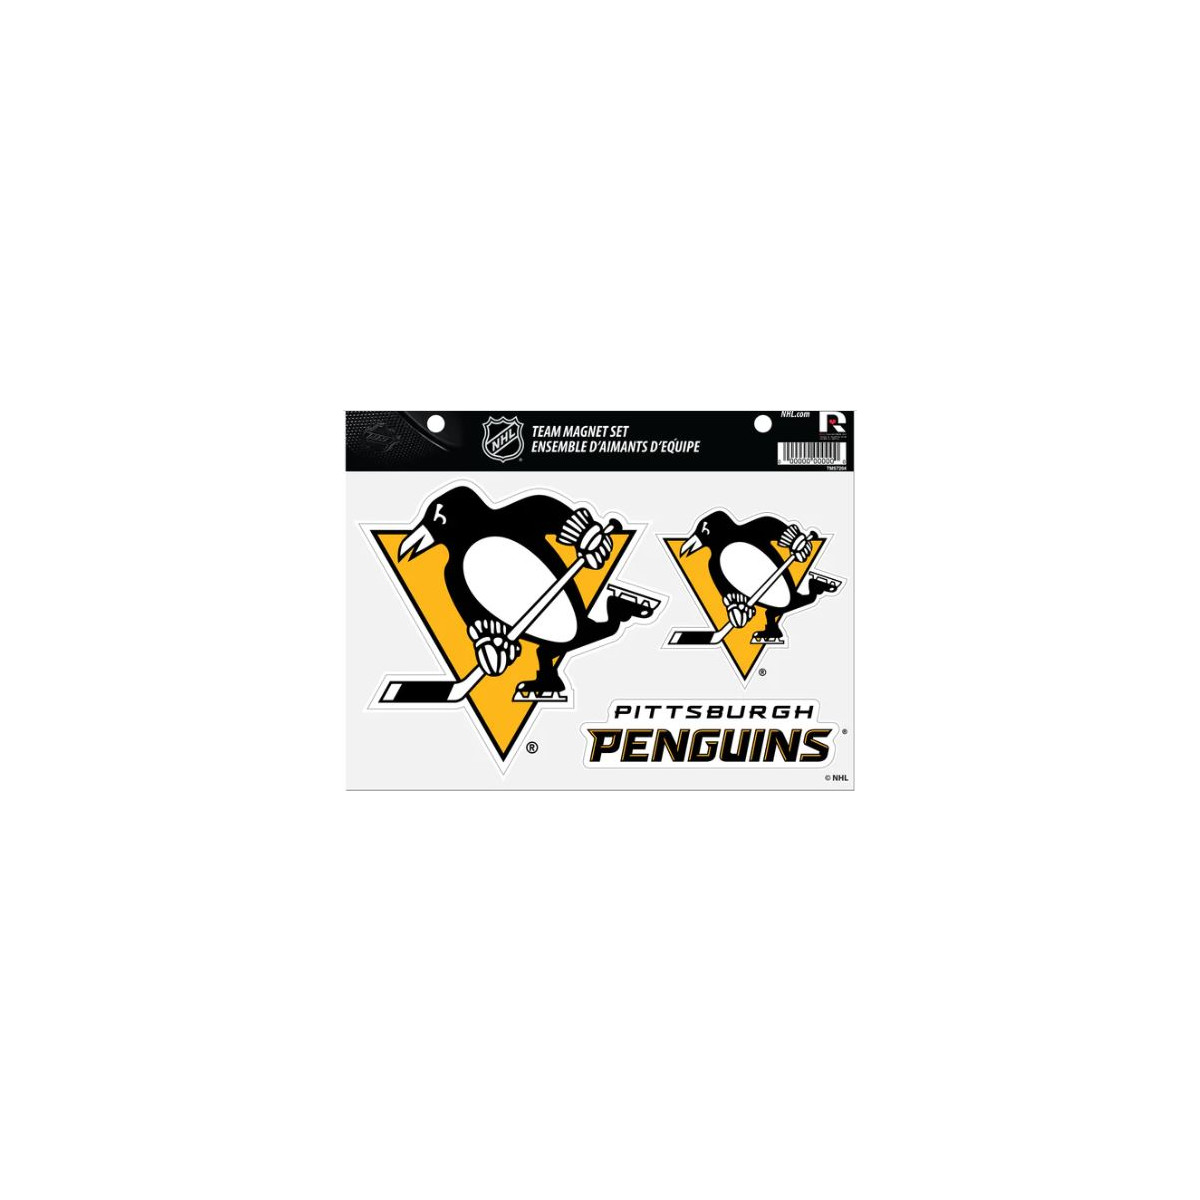 NHL Pittsburgh Penguins Team Magnet Sheet